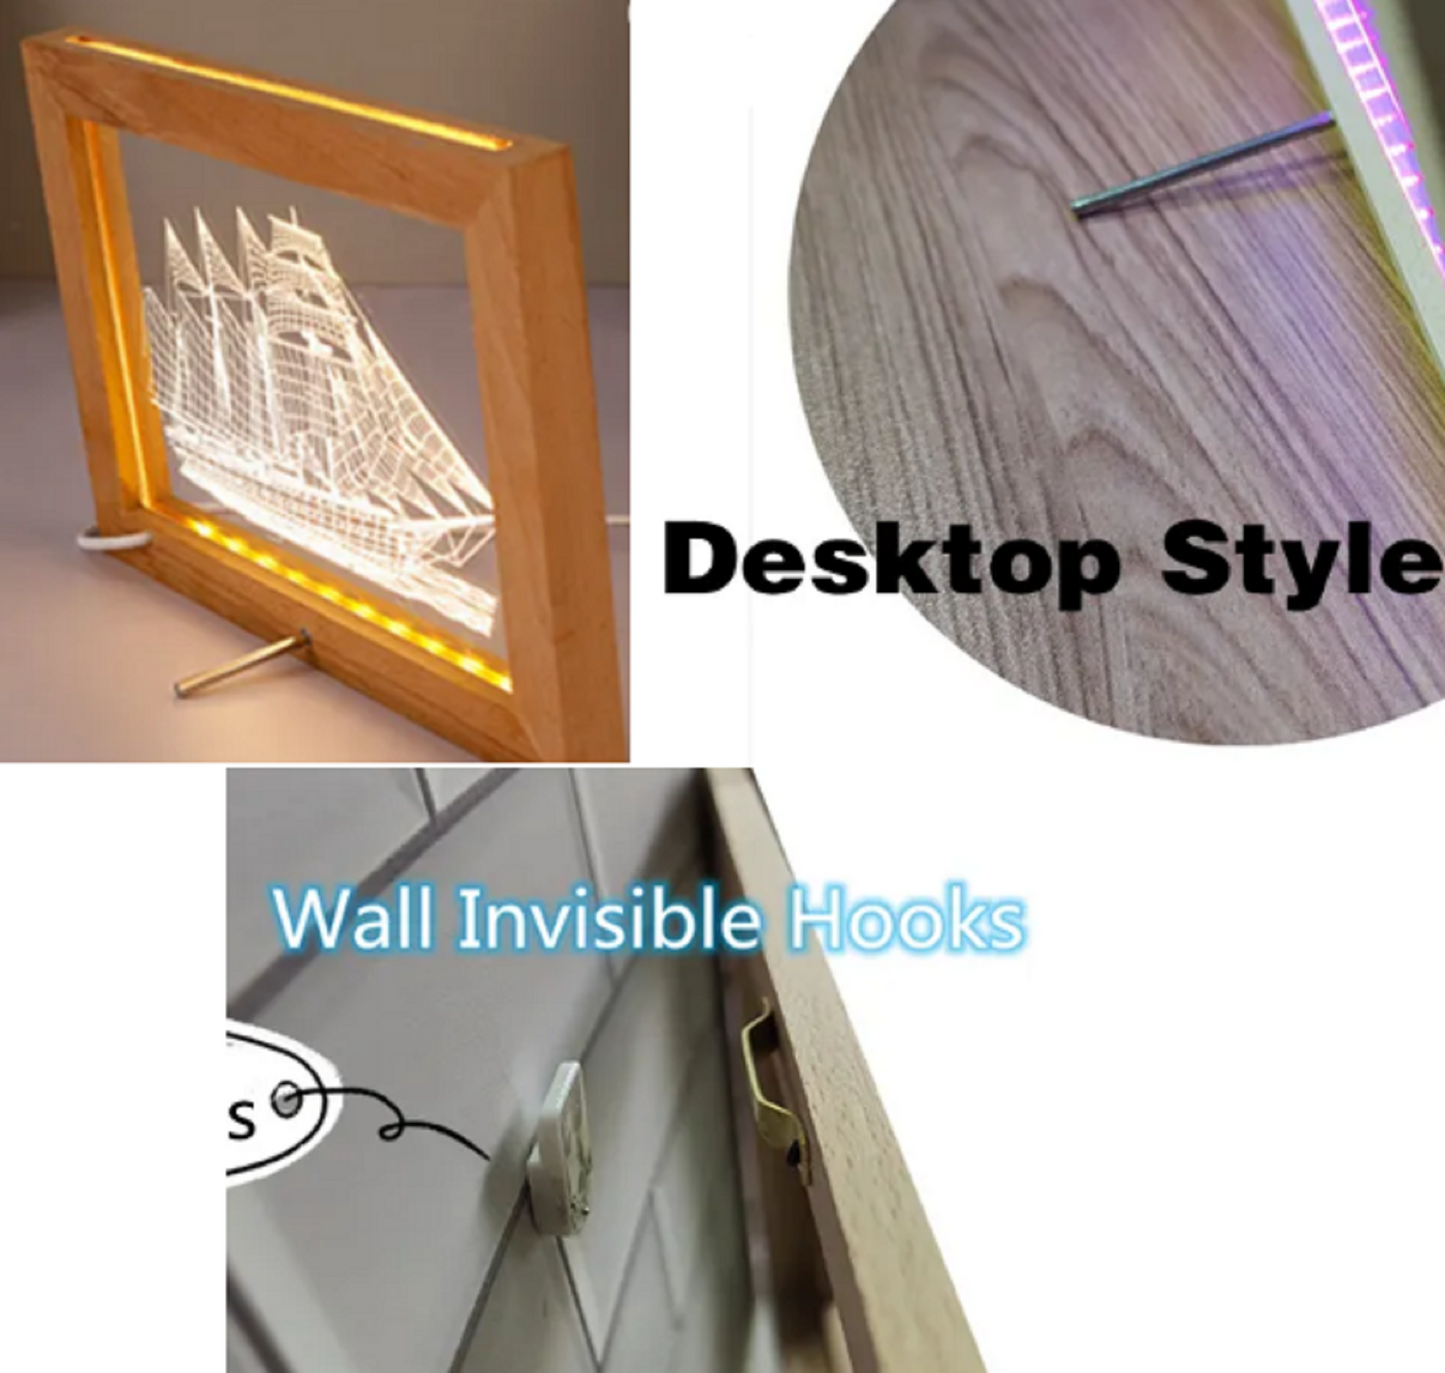 Neon Sign Framed Dual Color Guns & Ammo Wall Desktop Decor Free Shipping